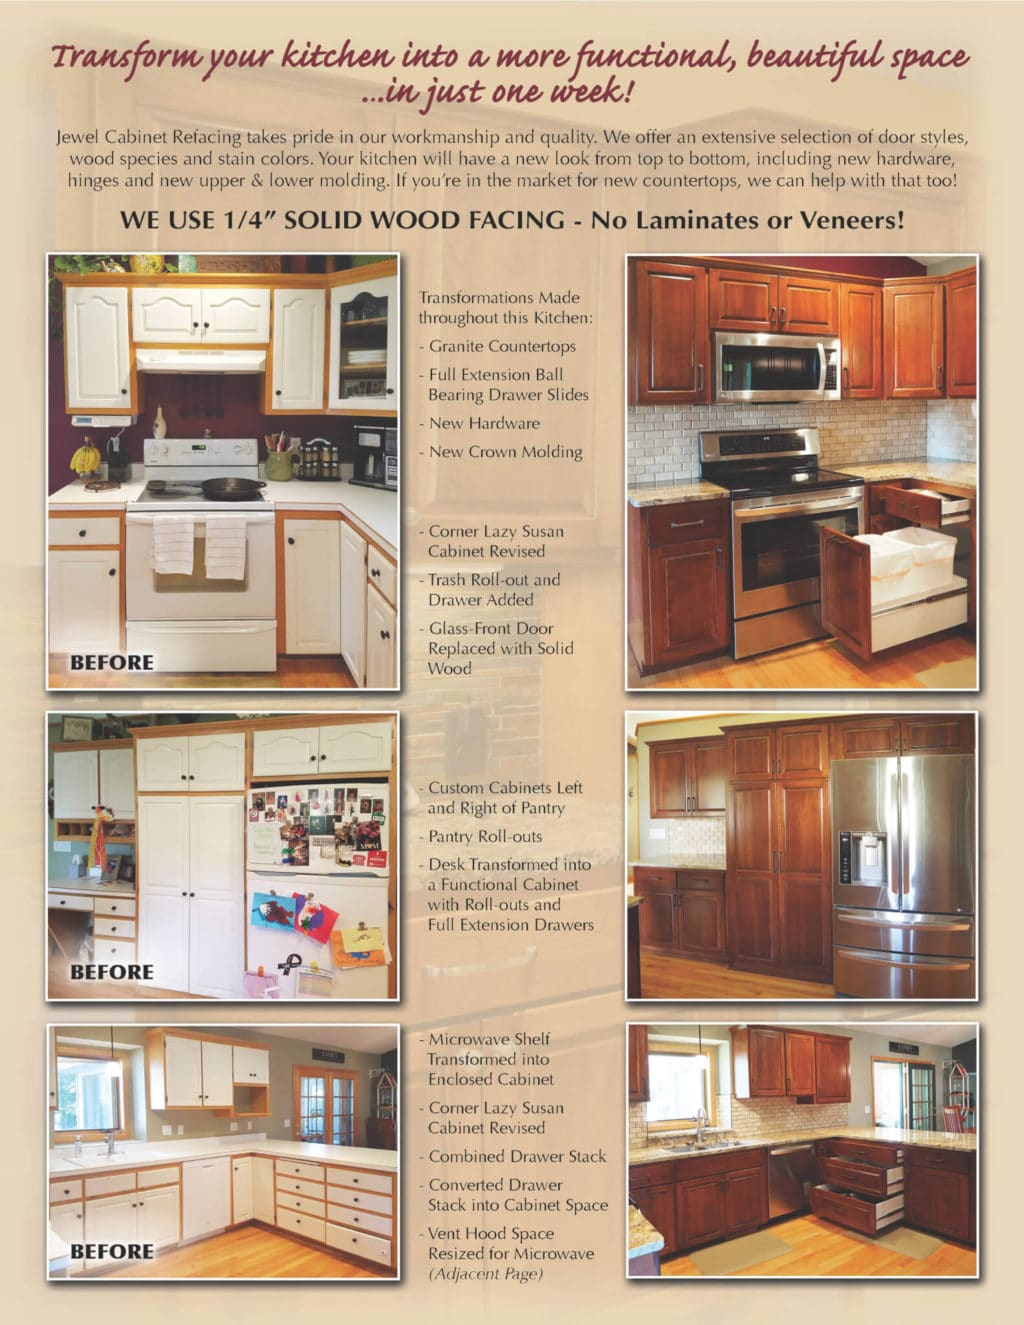 Jewel Cabinet Refacing brochure page 2